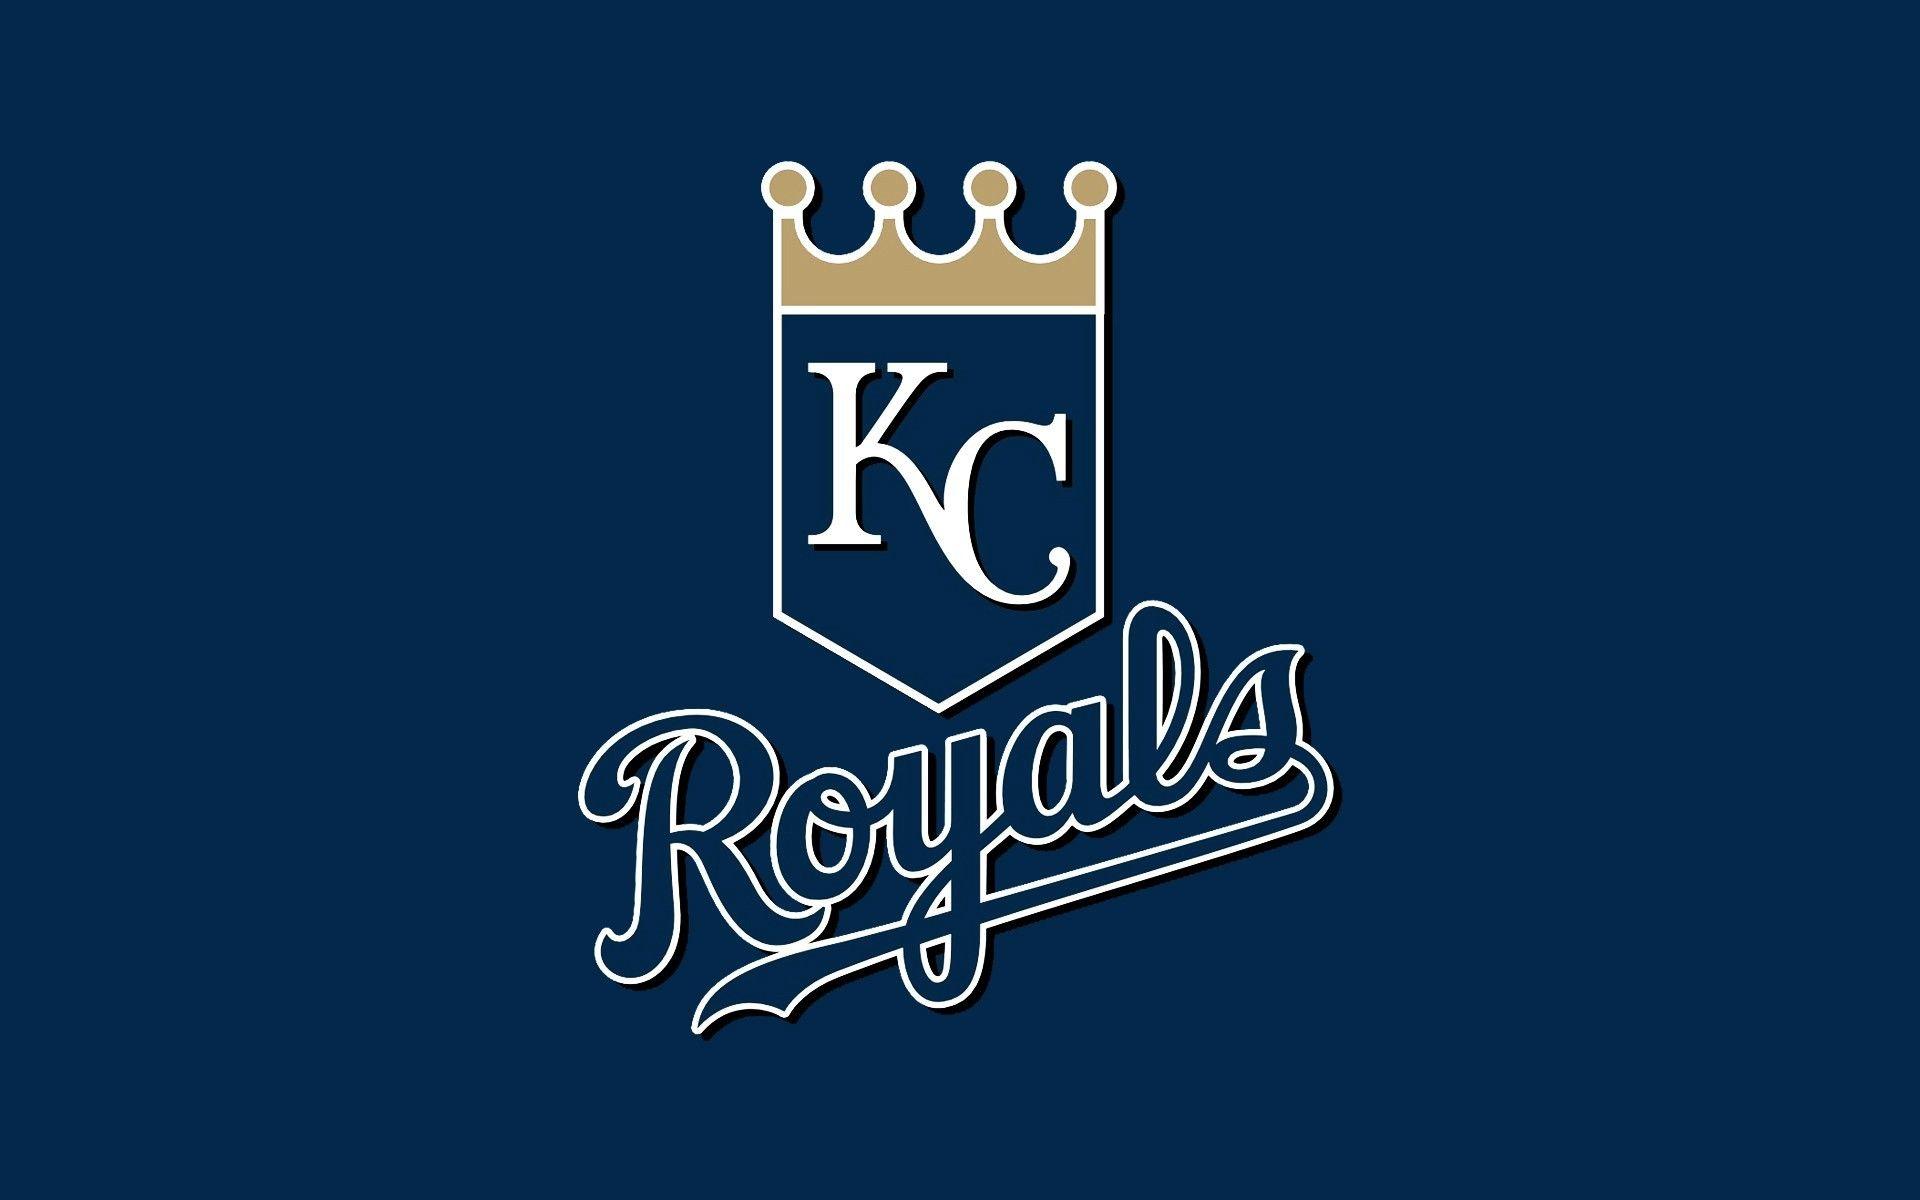 Kansas City Royals Wallpaper 2018kansas City Royals Wallpaper 2018